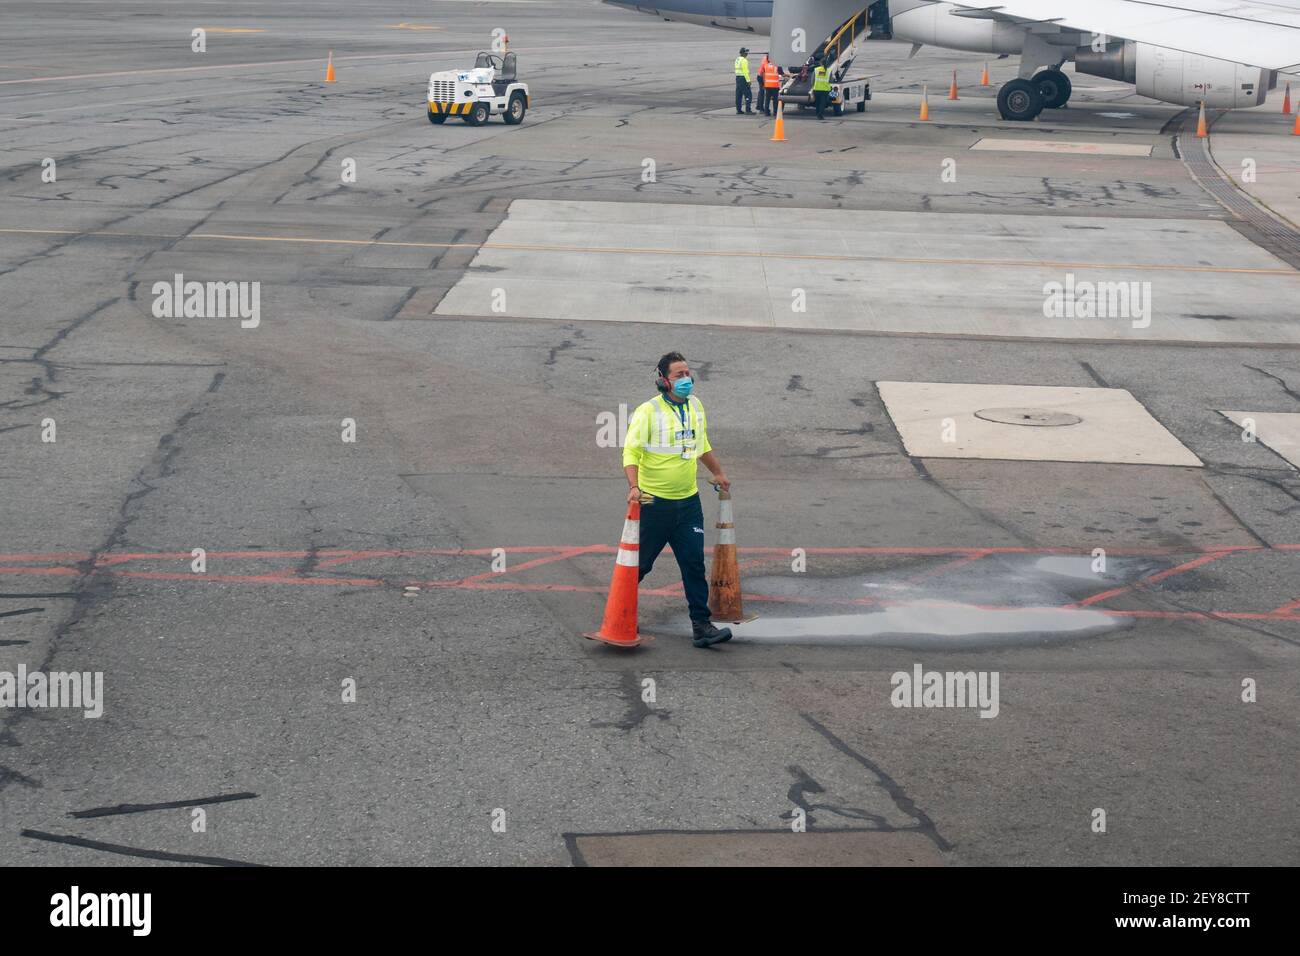 Bogota, Colombia - February 25 2021: Latin Man Wearing Mask, Yellow Shirt Walks Down Runway with a Orange Cones Stock Photo